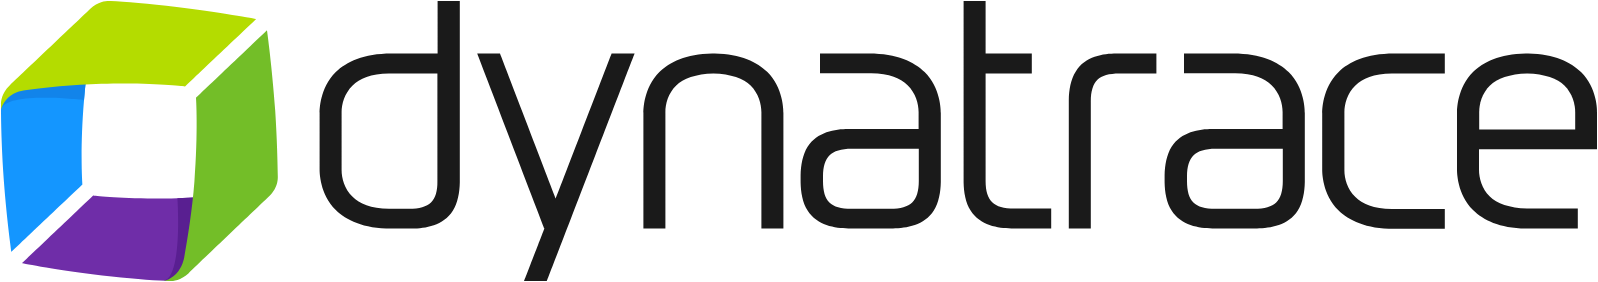 Dynatrace logo large (transparent PNG)